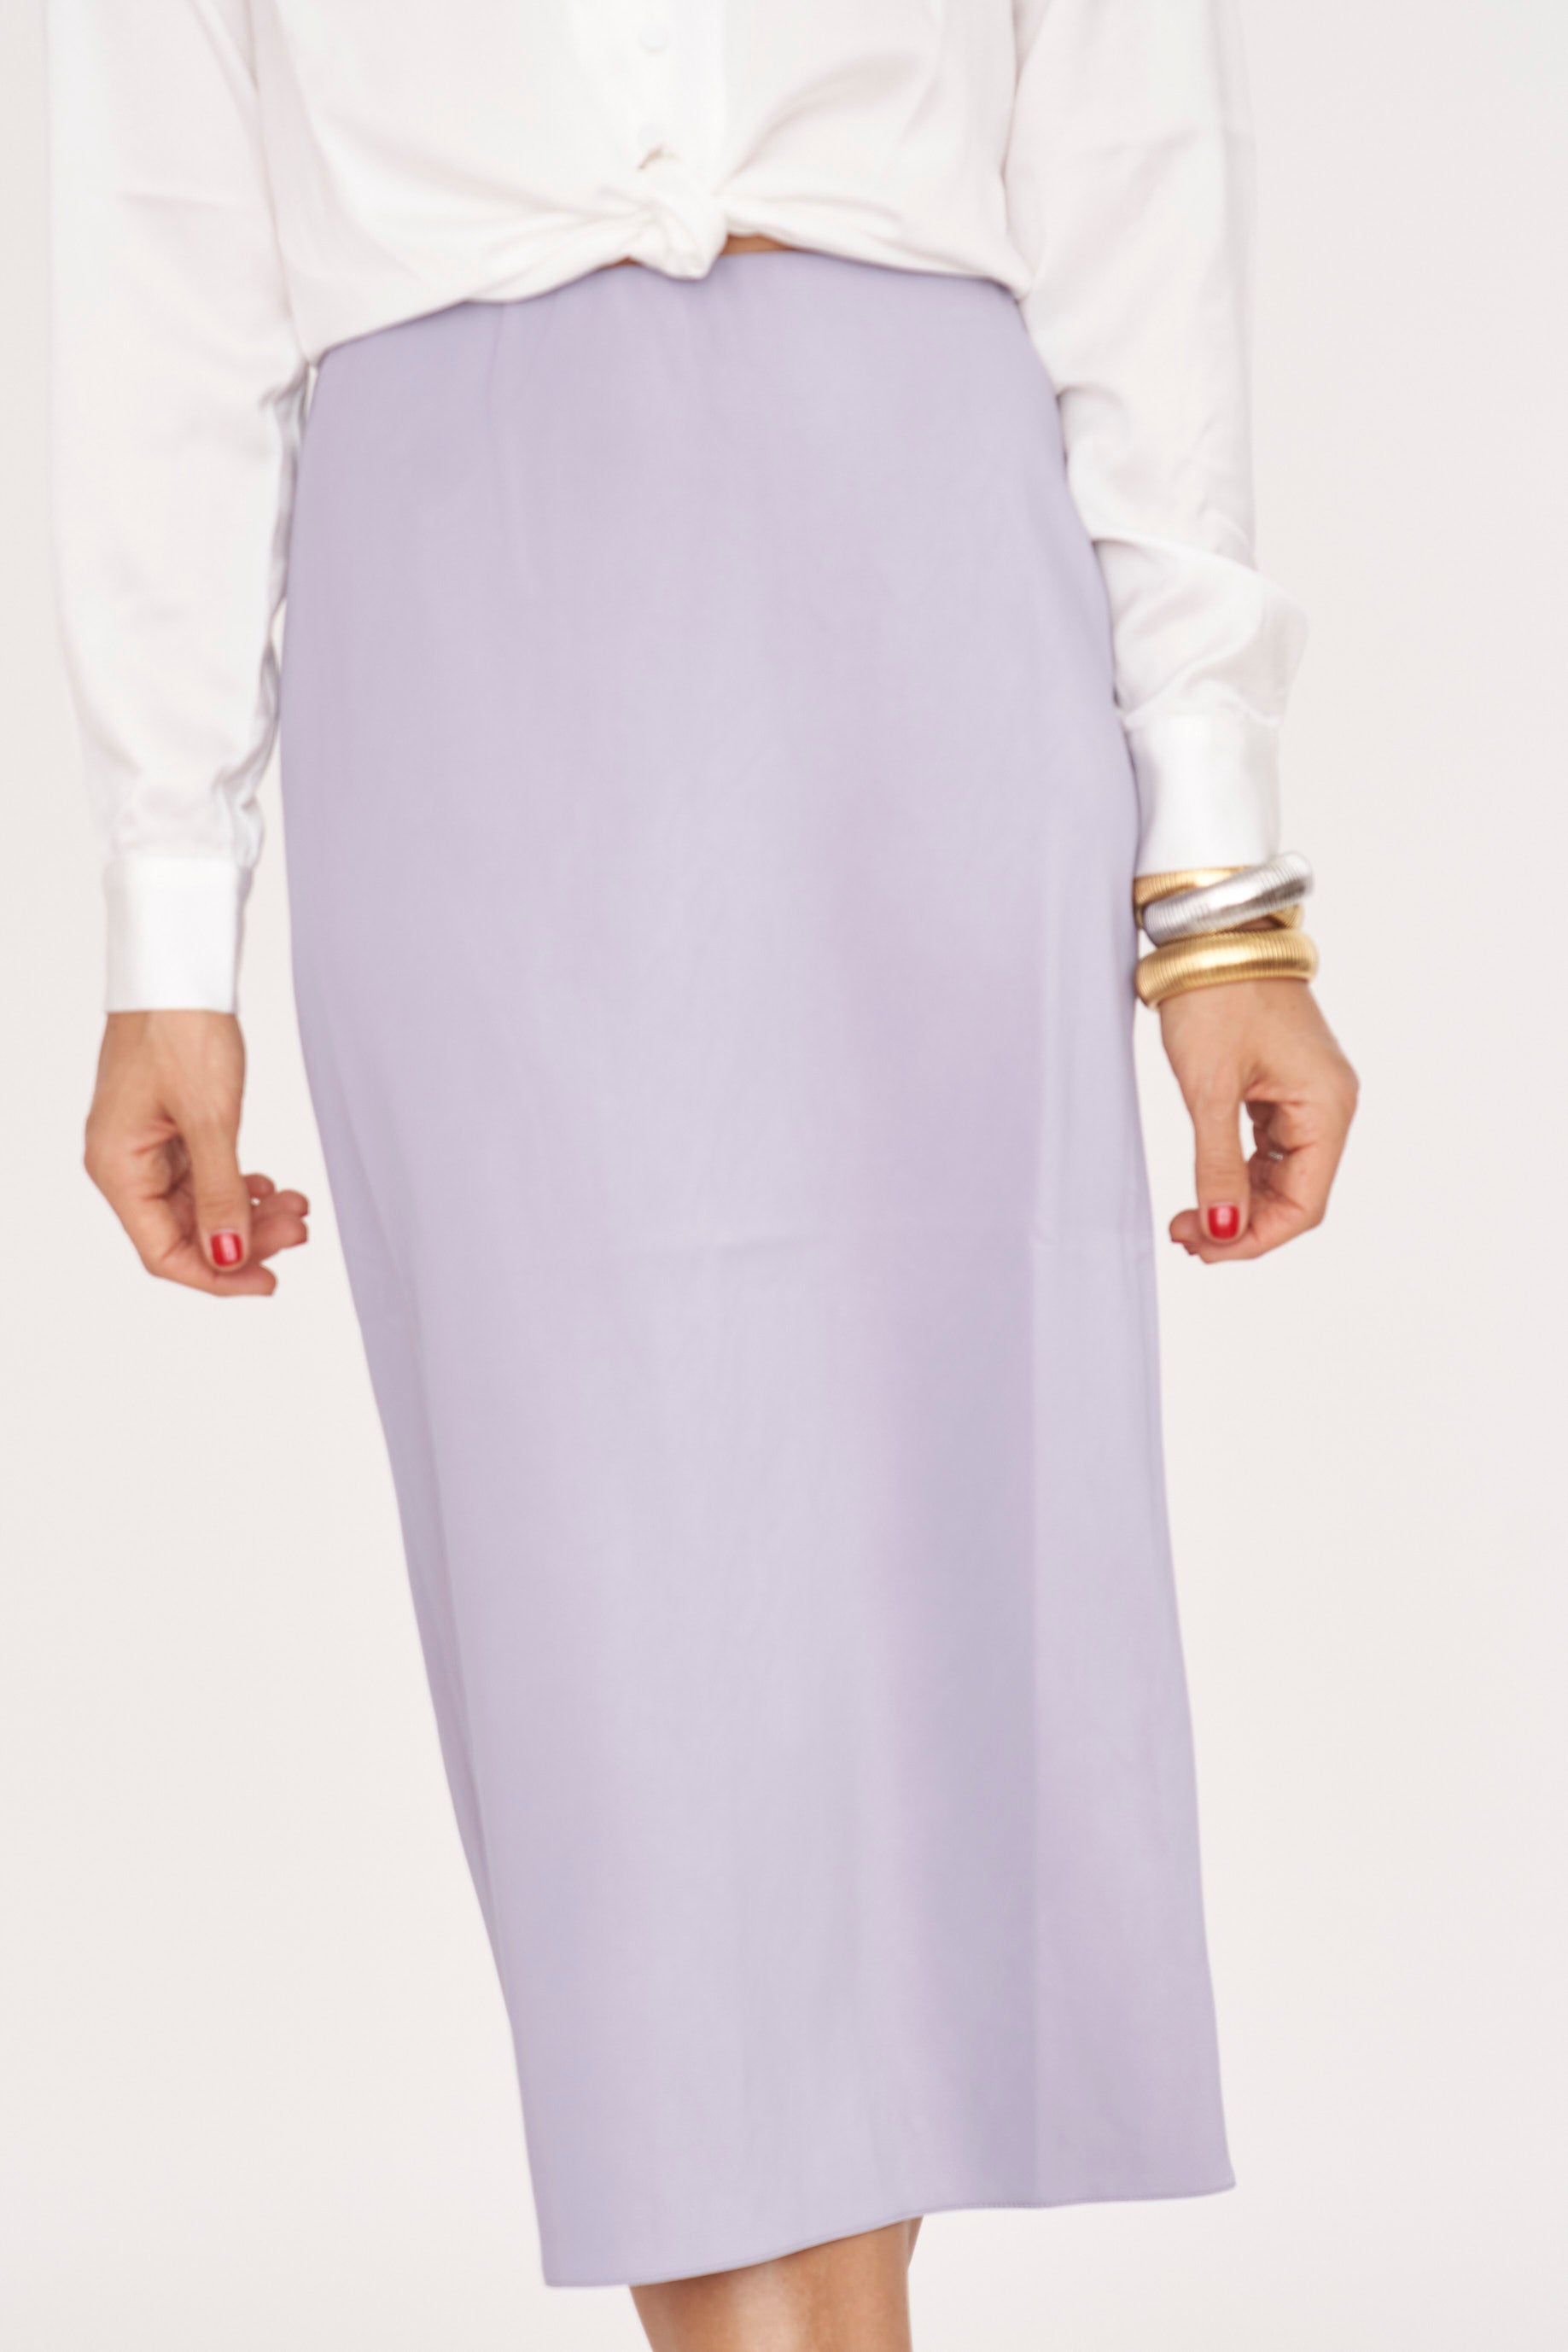 Ello Lavender Leather Midi Skirt